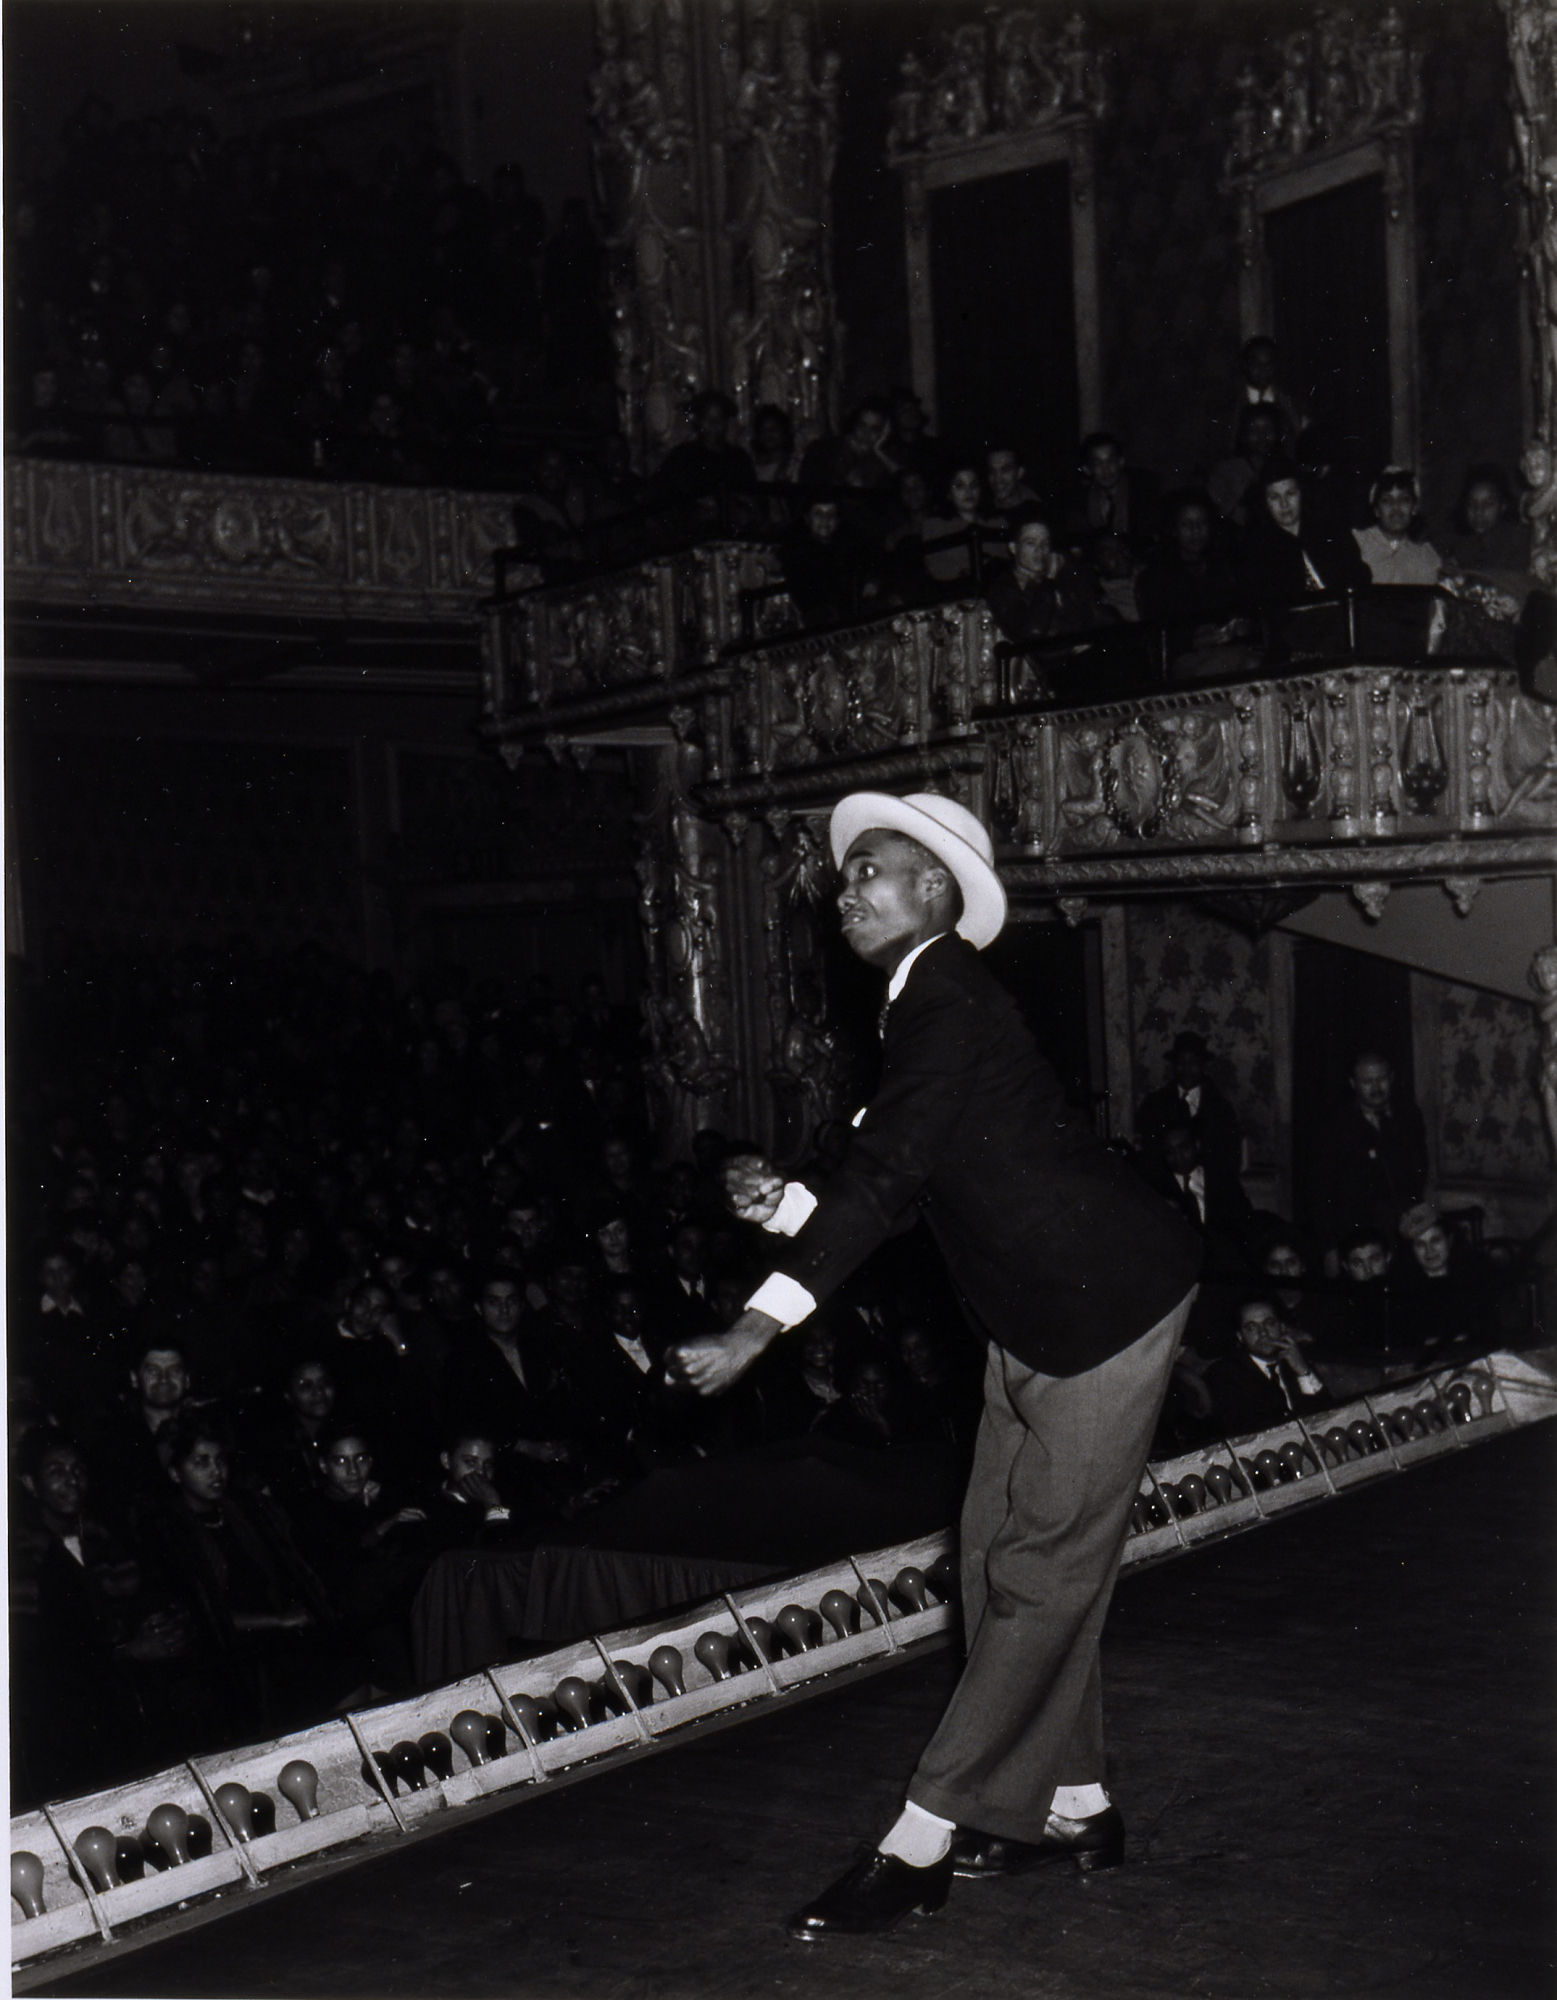 Aaron Siskind, "Amateur Night, Apollo Theater, Harlem", 1937